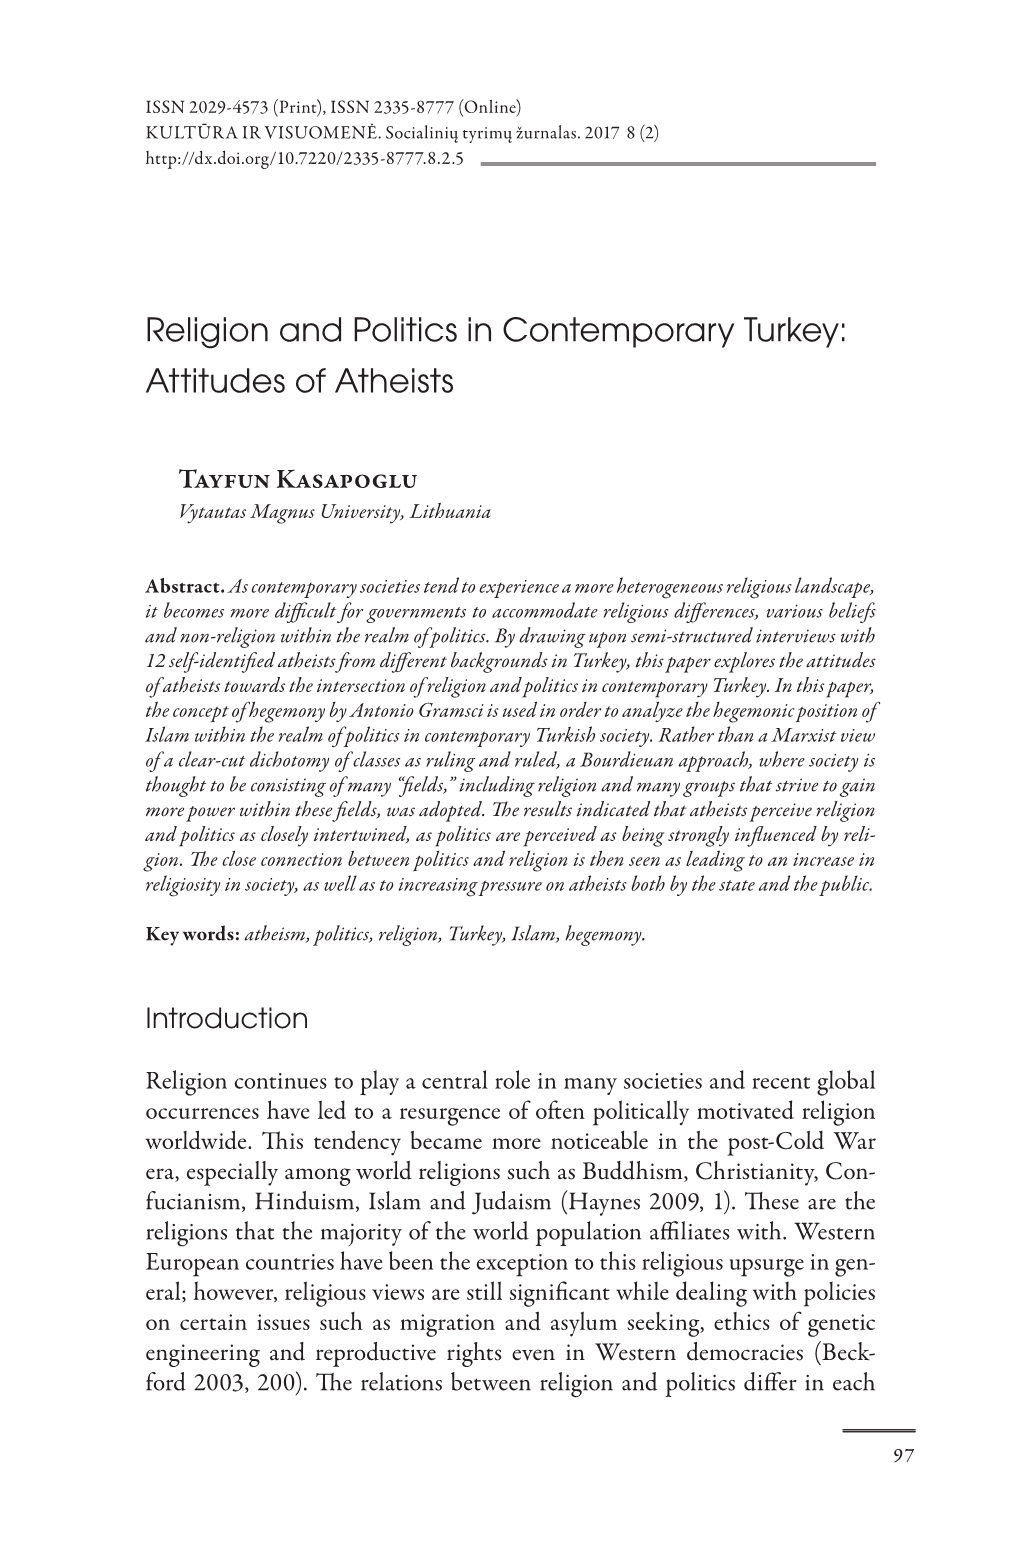 Religion and Politics in Contemporary Turkey: Attitudes of Atheists